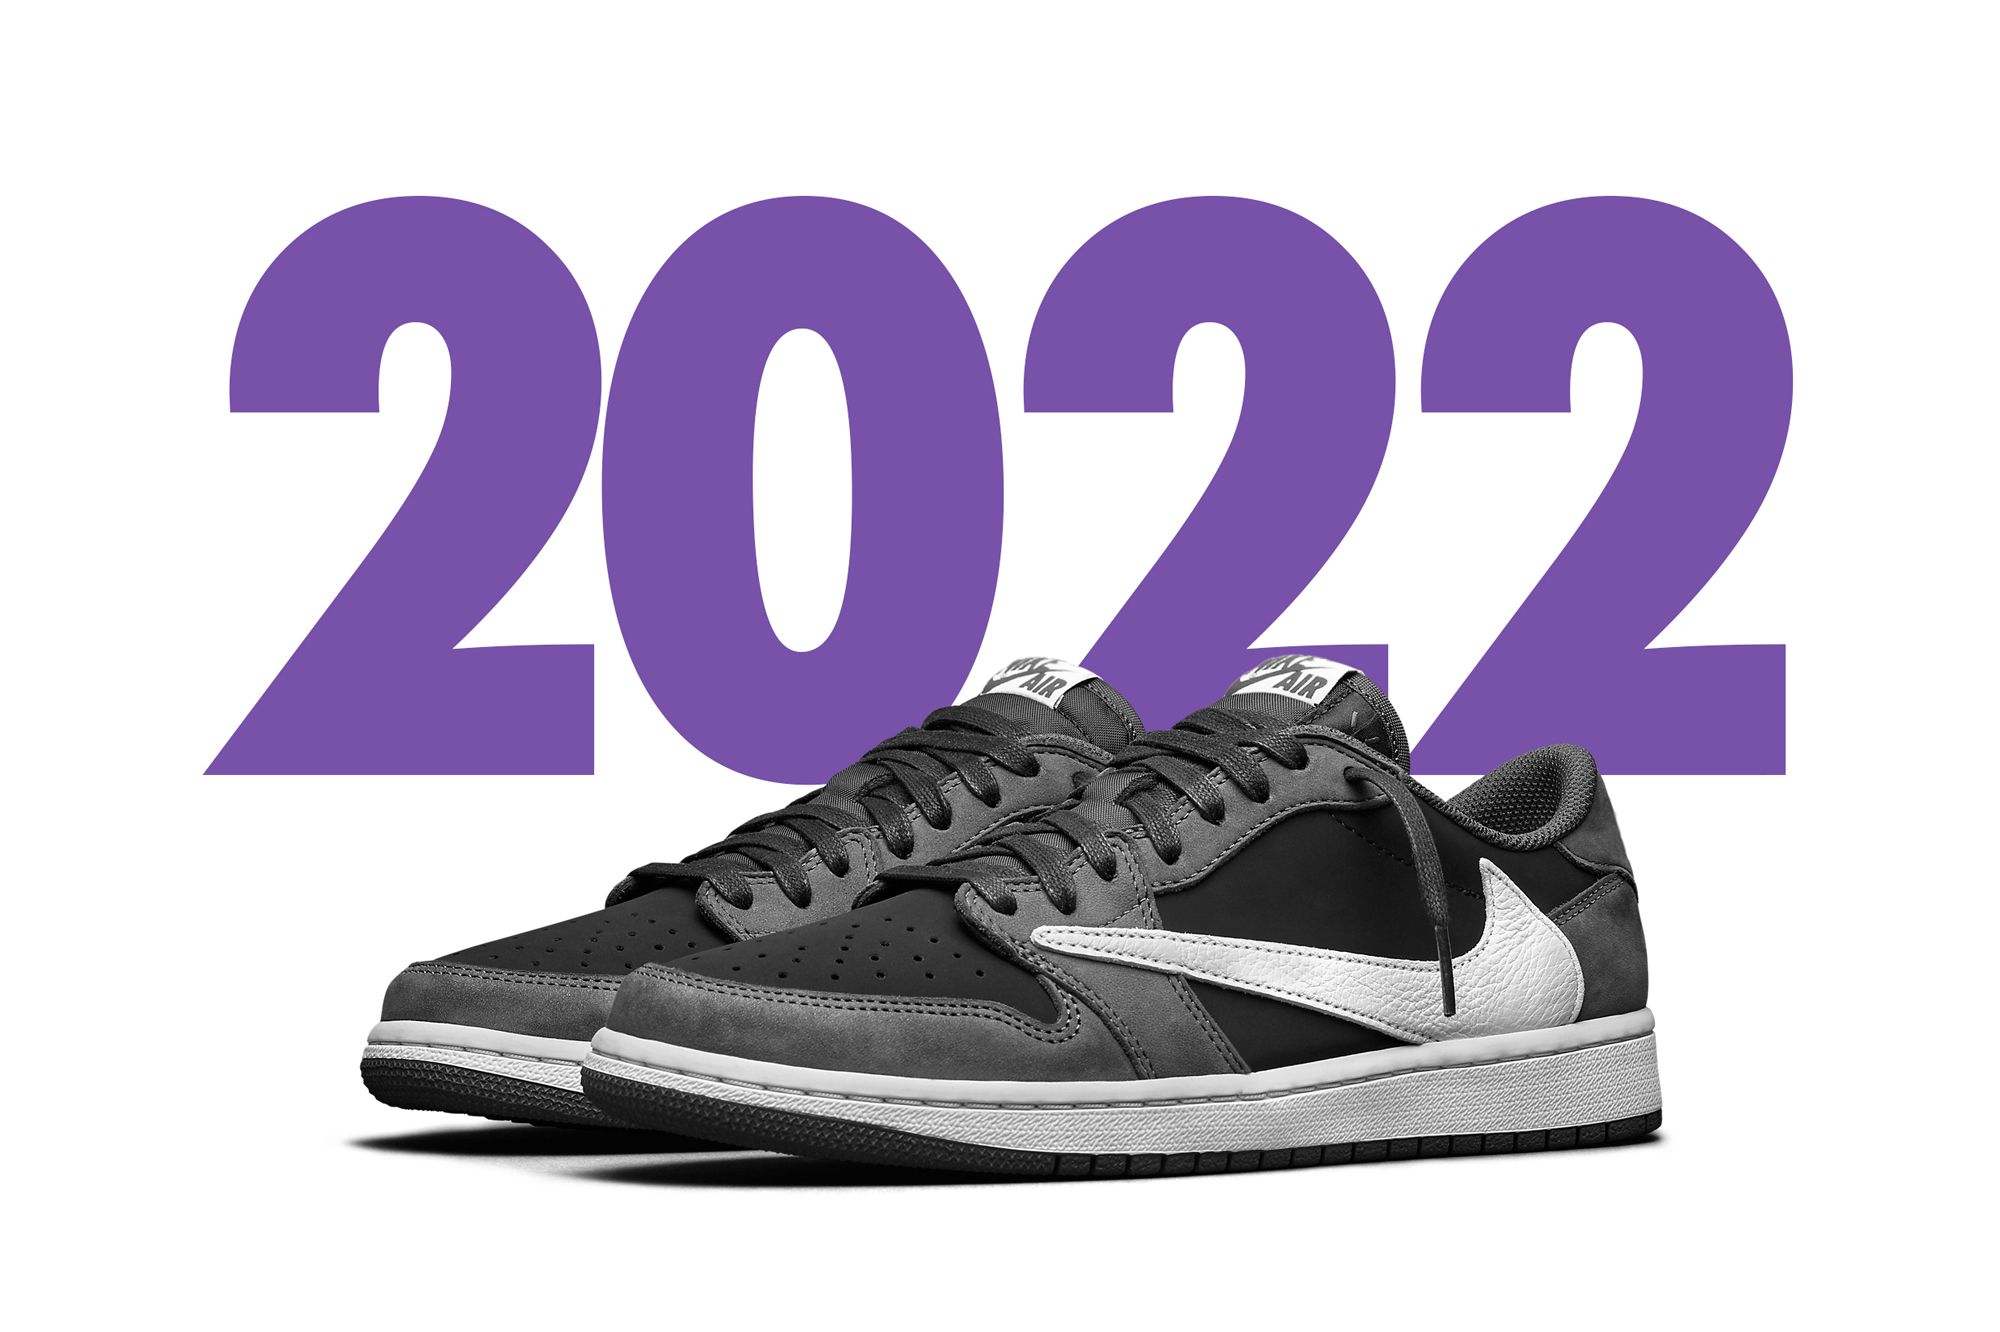 Opa reservoir Recensent Sneakers We're Already Looking Forward To in 2022 - Sneaker Freaker